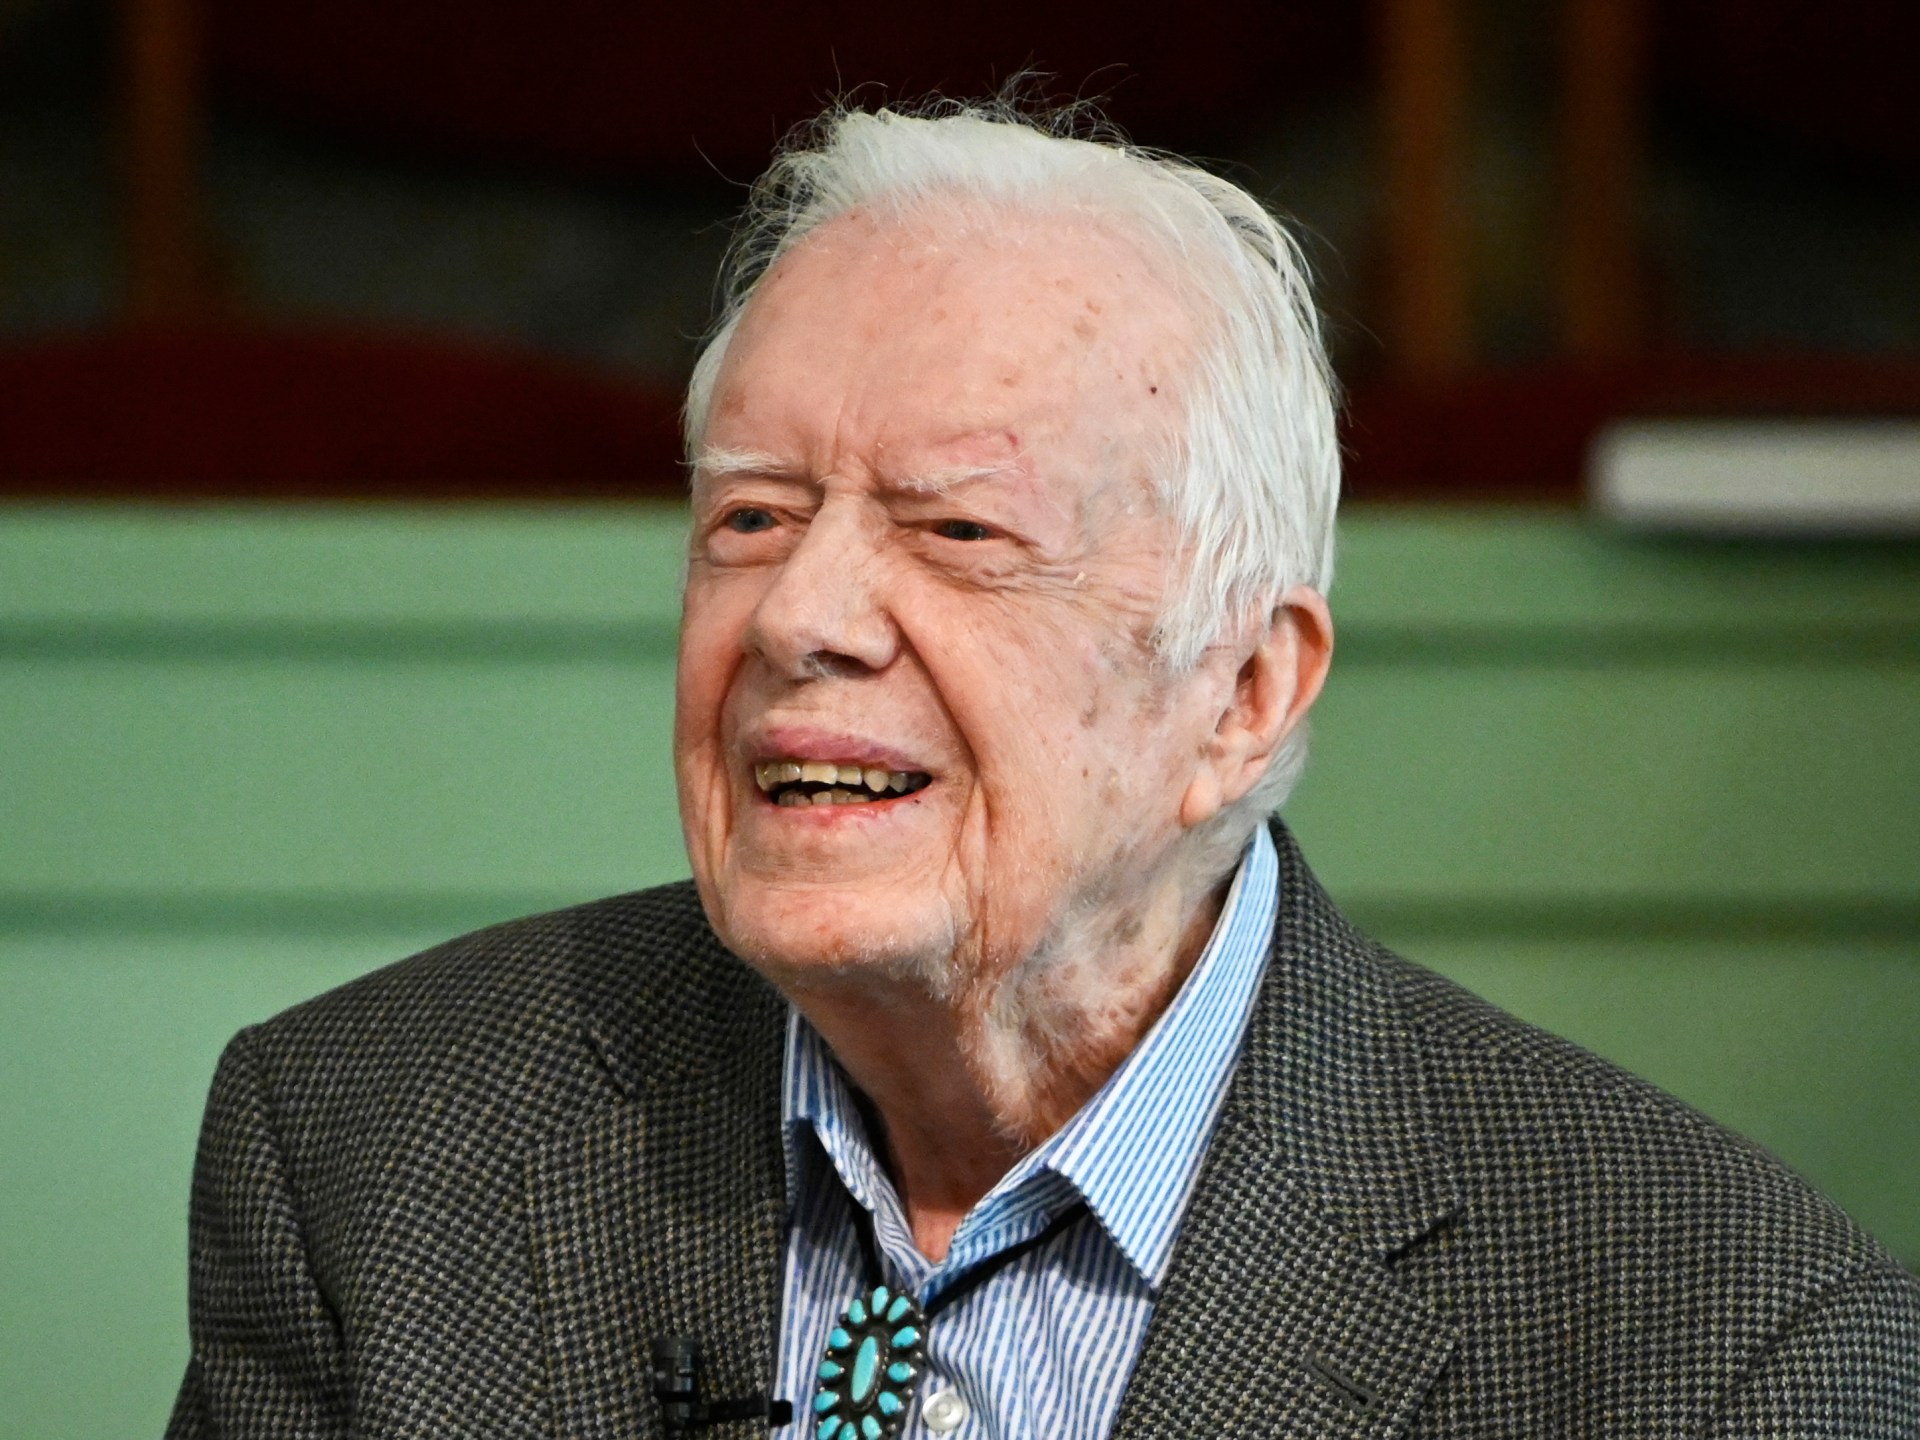 Mantan Presiden AS Jimmy Carter memulai perawatan rumah sakit di rumah |  Berita